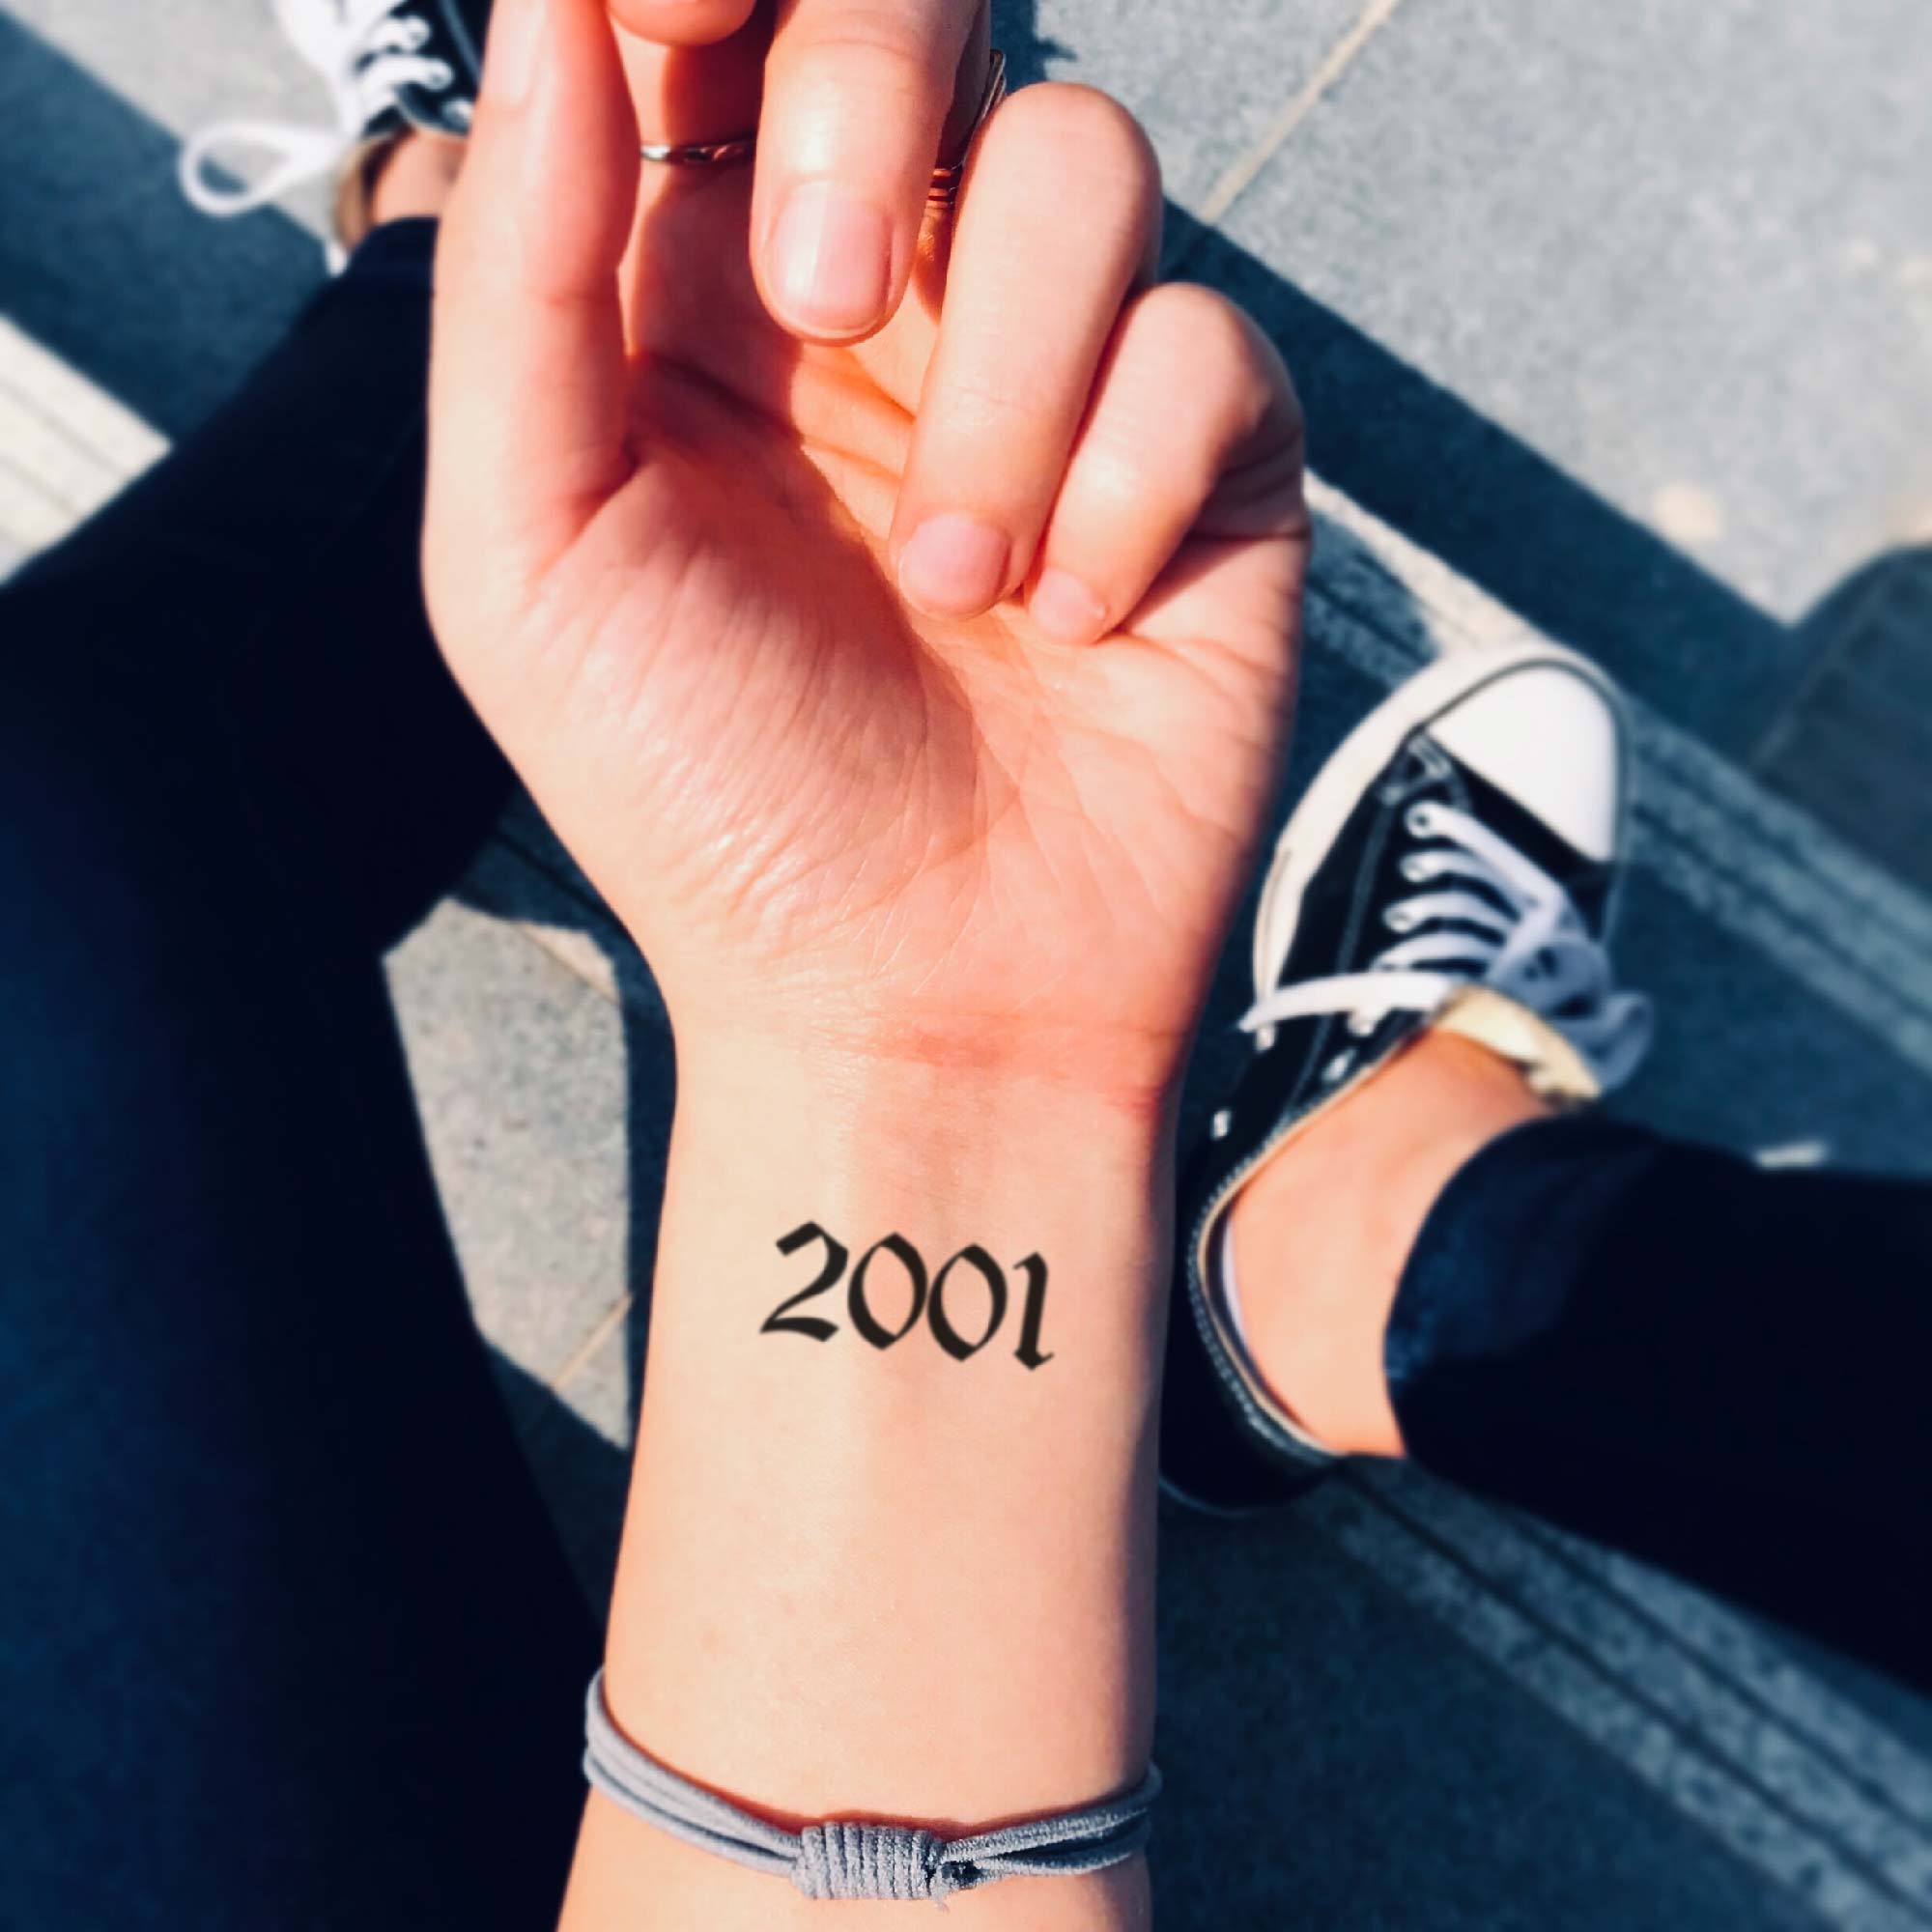 2001 tattoo❤️‍🔥 | Hand tattoos, Sleeve tattoos, Back tattoos for guys